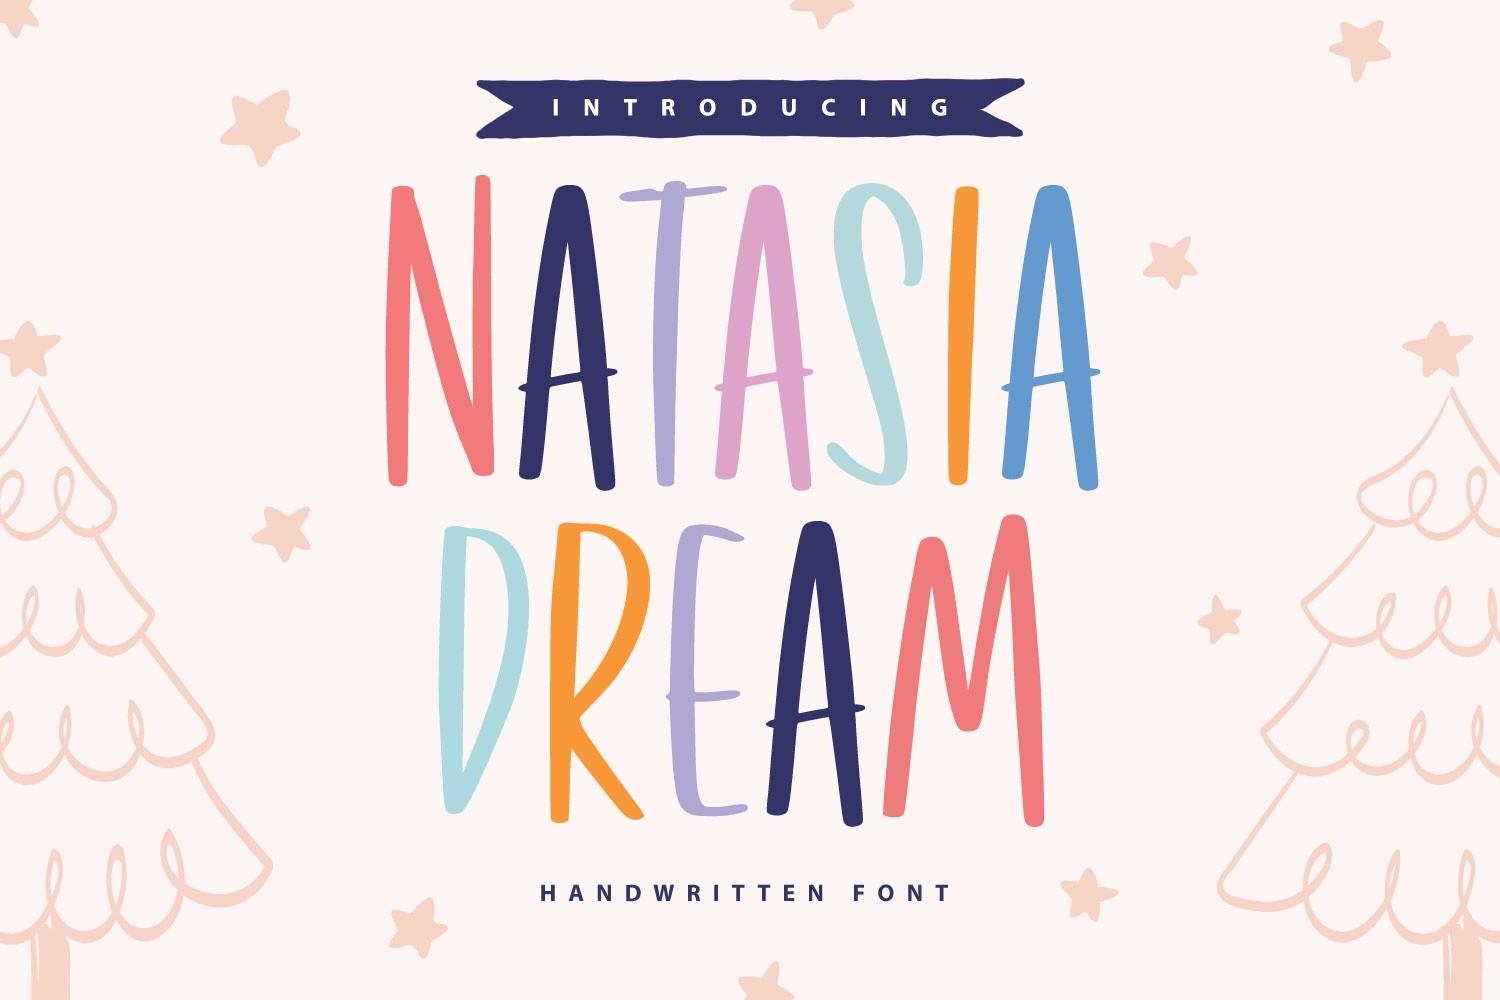 Natasia Dream Font